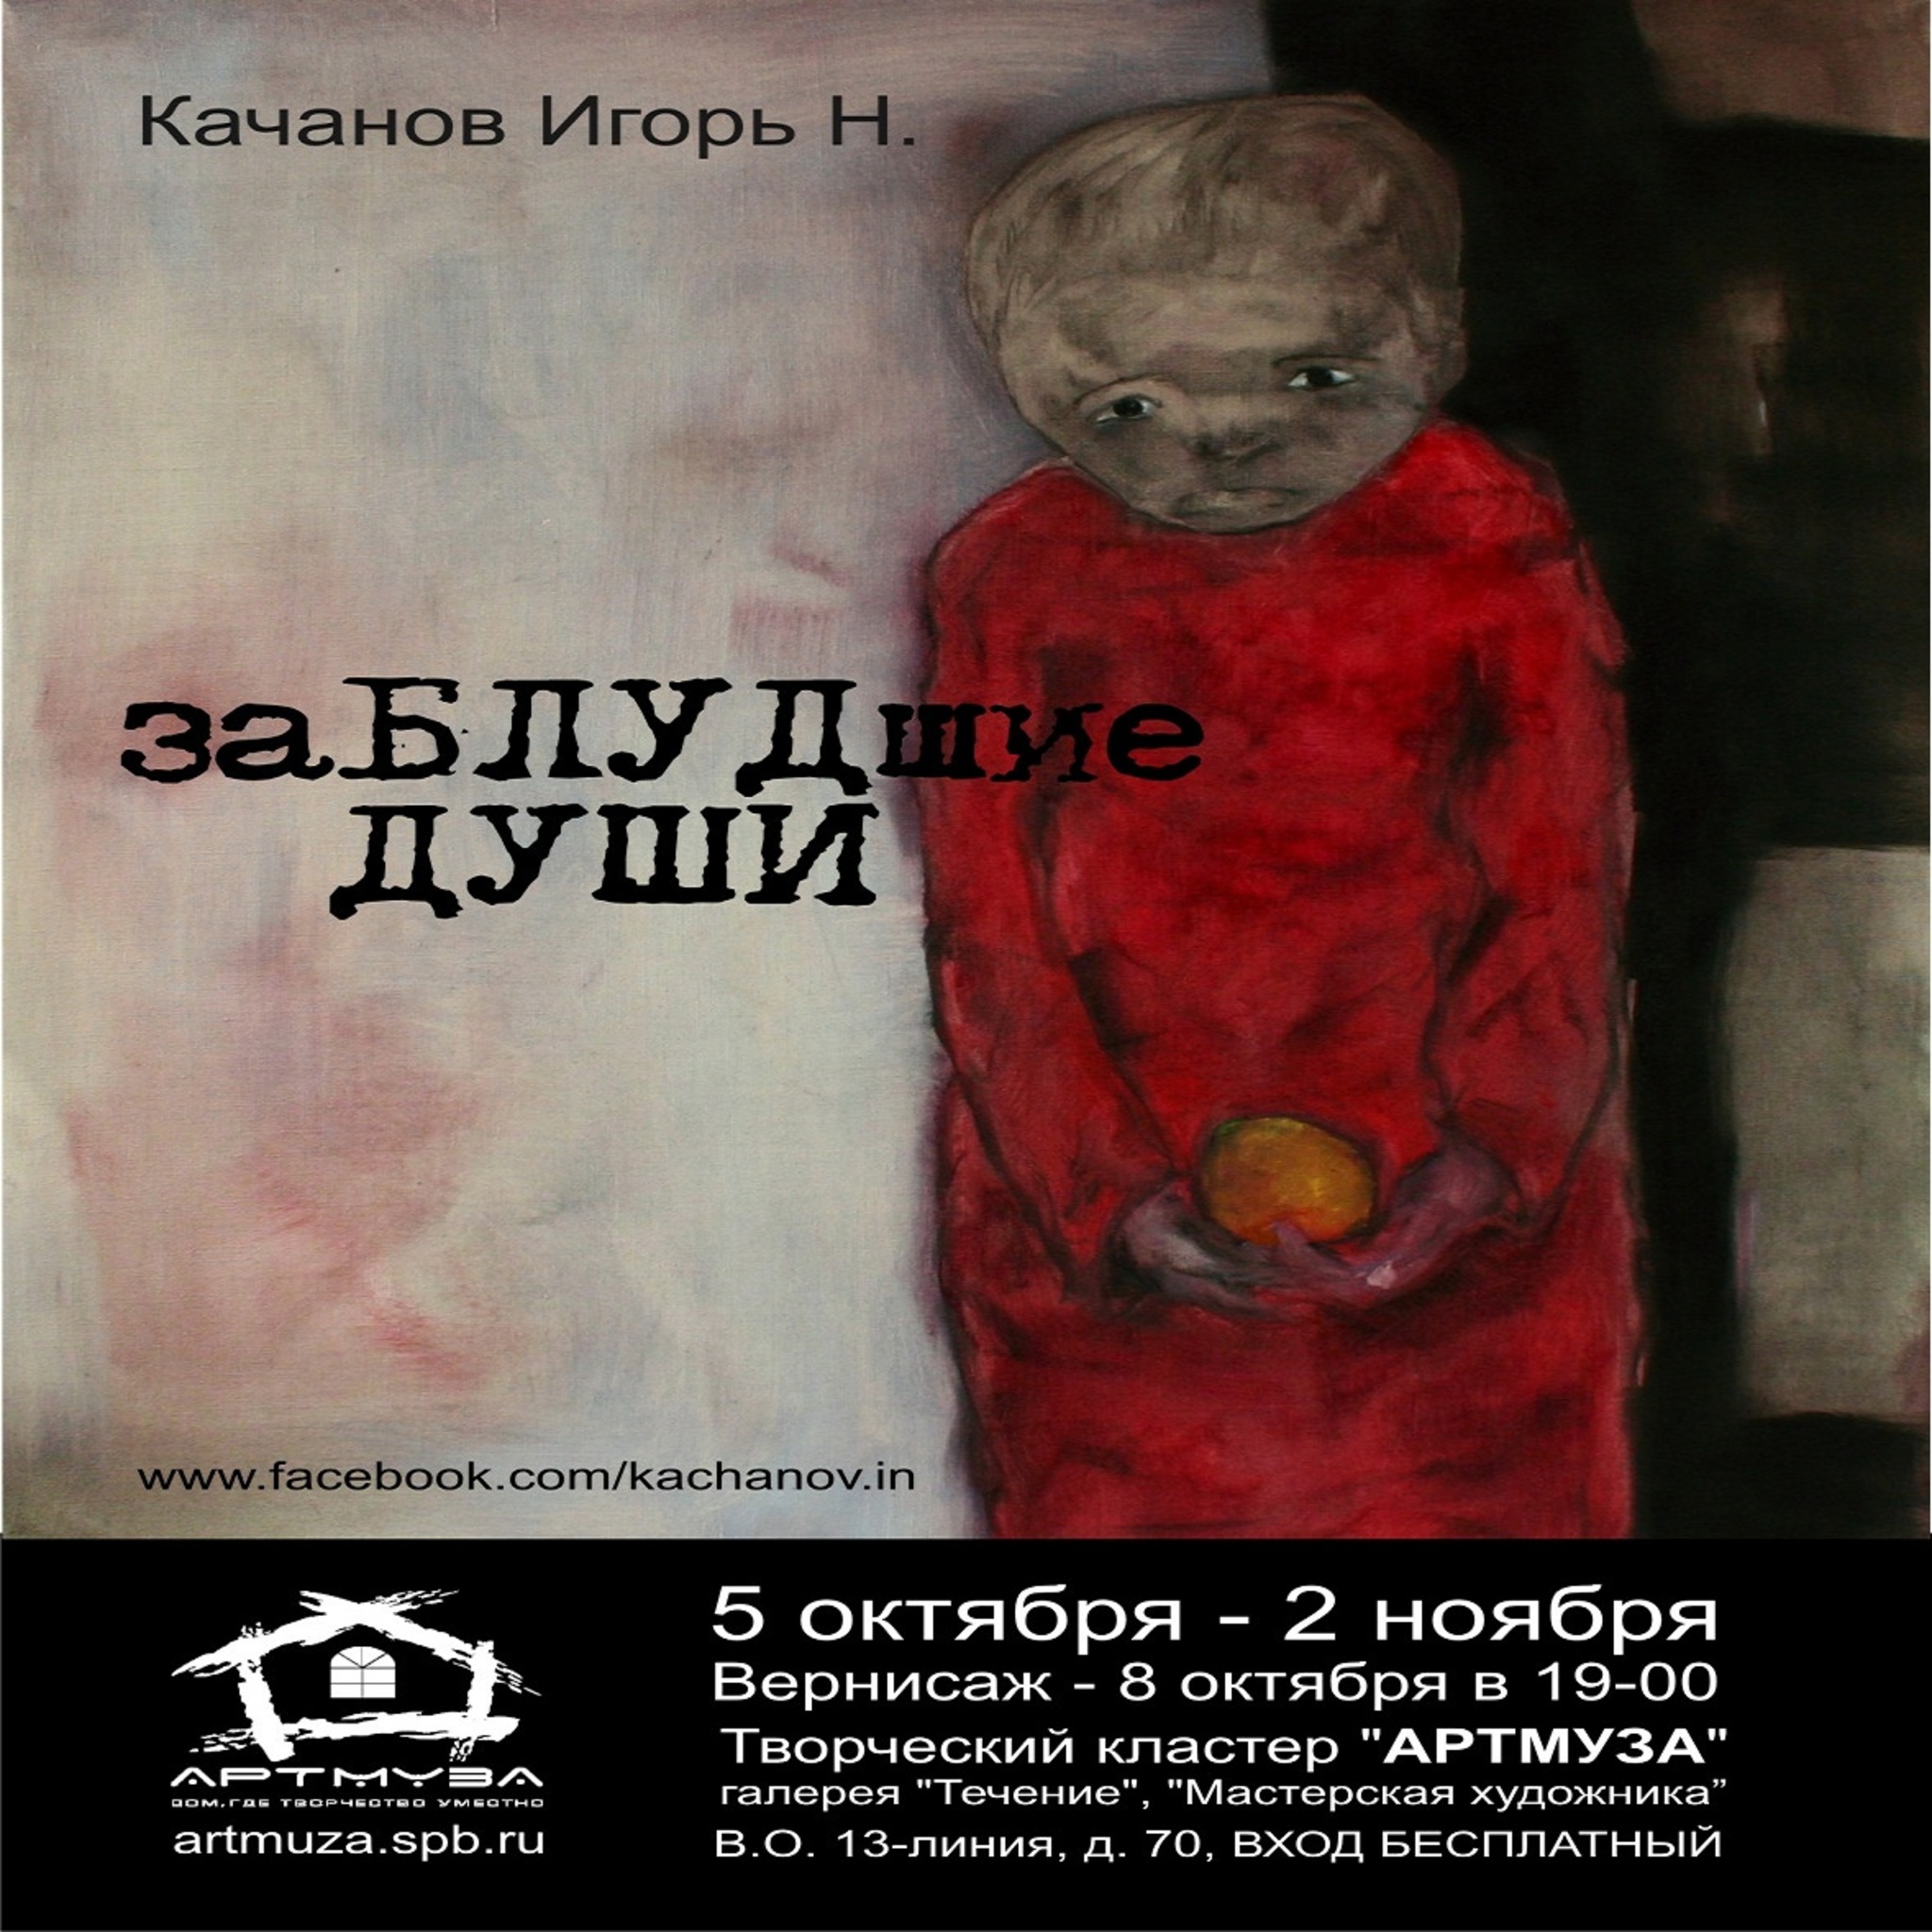 The exhibition of Igor Kachanov Lost Souls